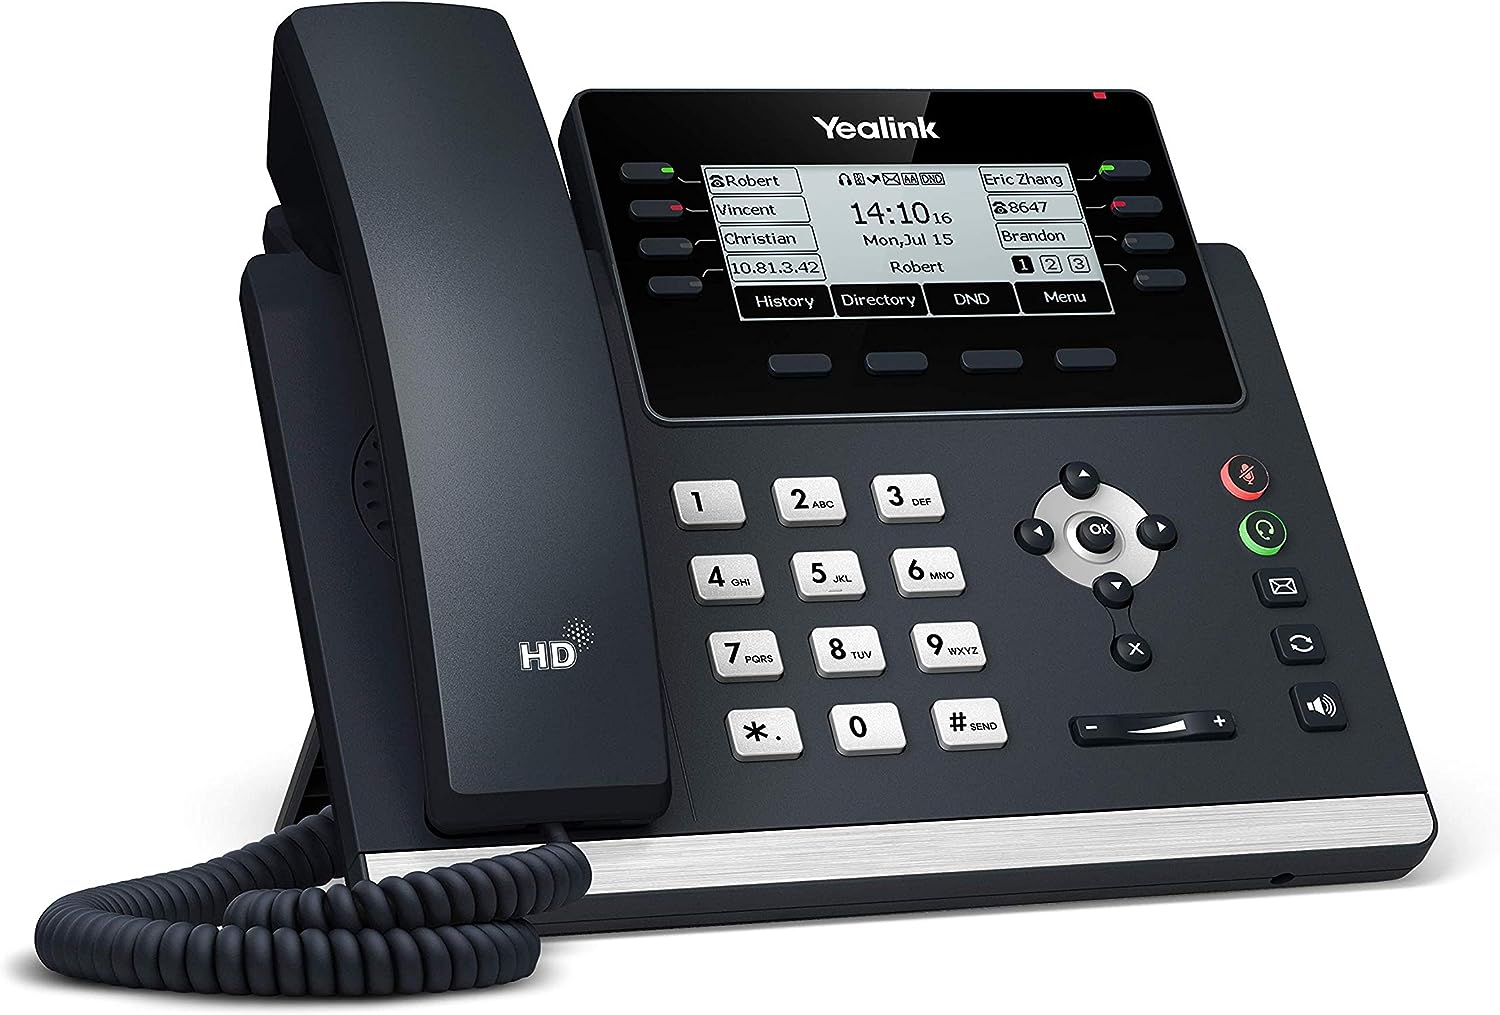 Yealink T42U-CL IP Desk Phone with Accessories - Black (Certified Refurbished)